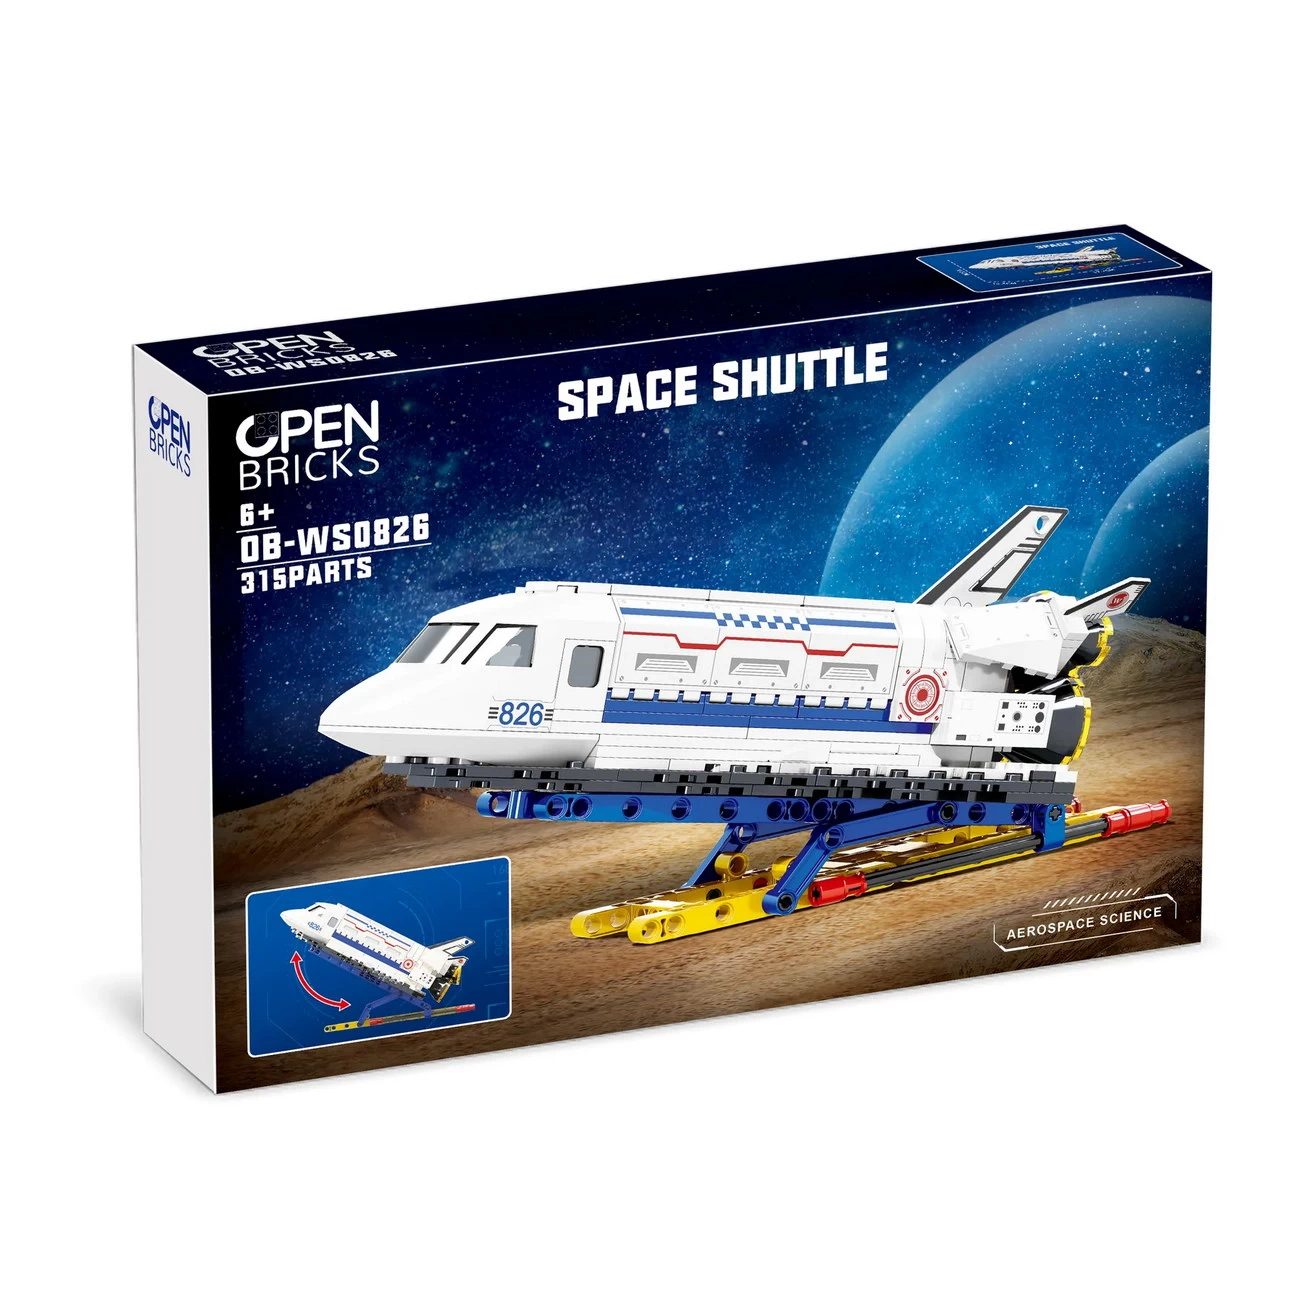 Space Shuttle OPEN BRICKS